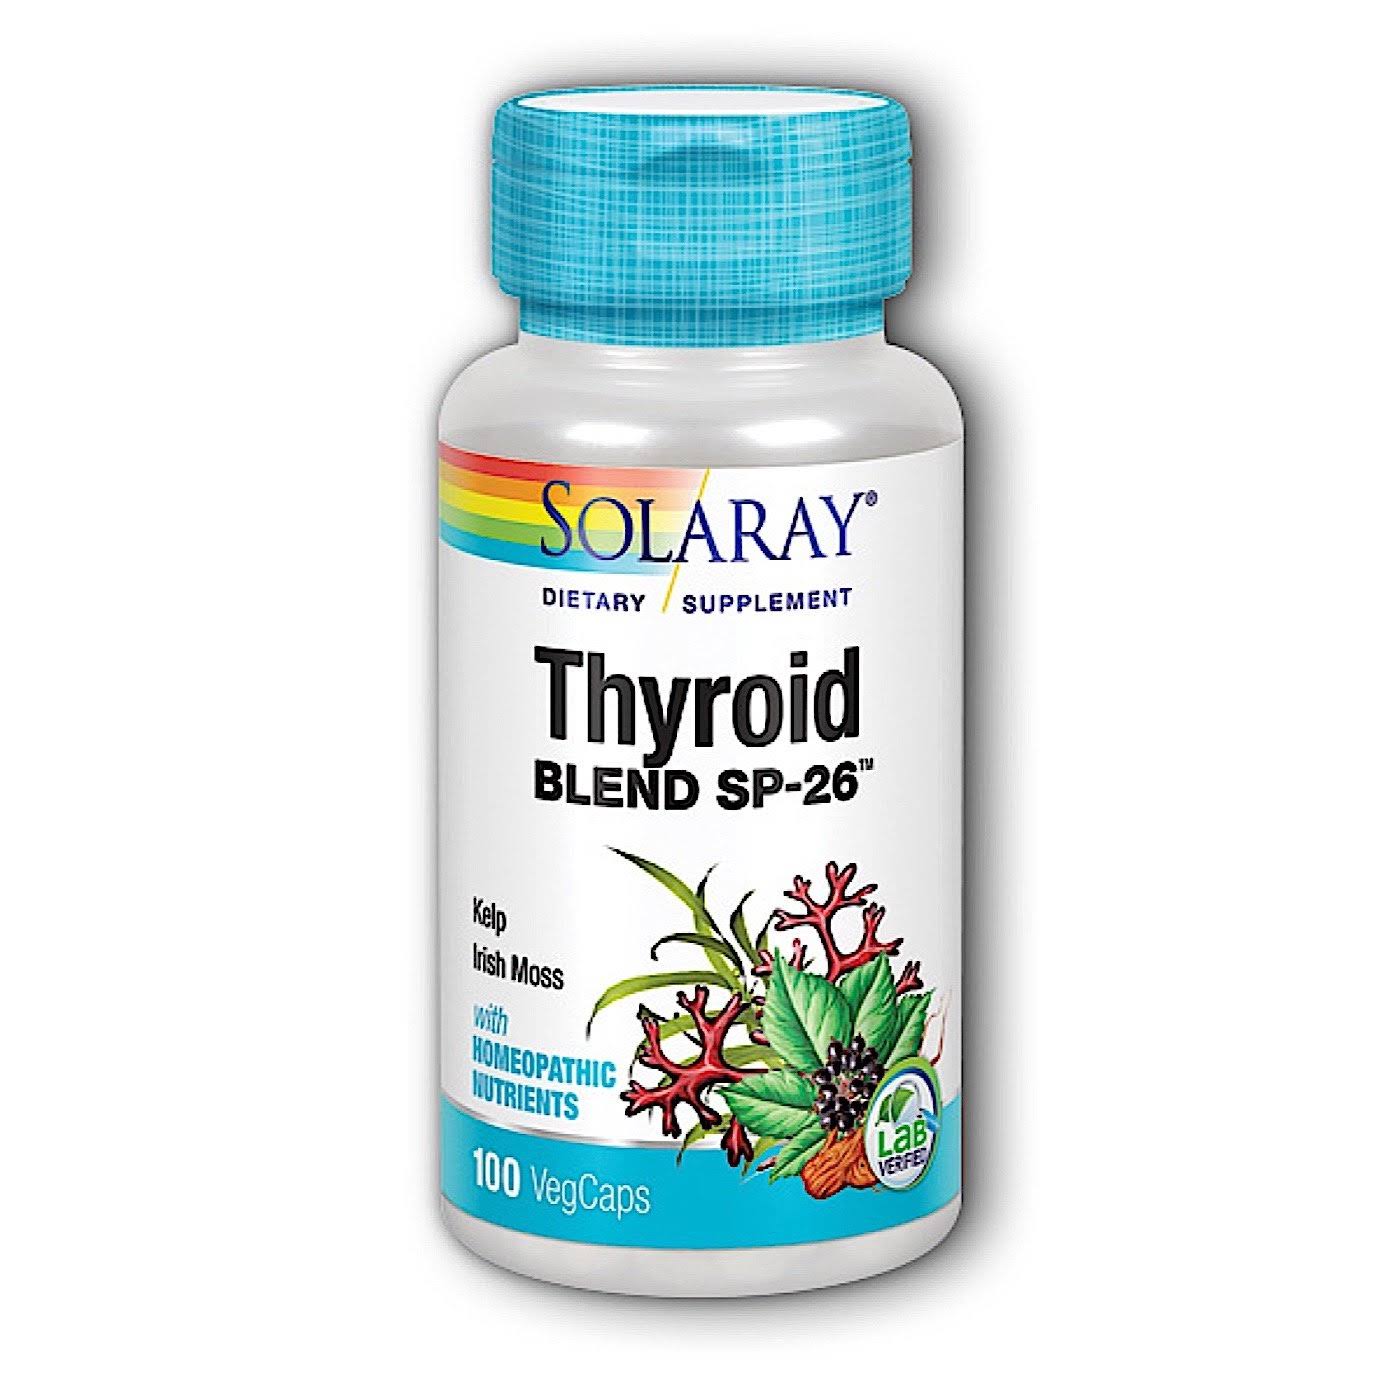 Solaray Thyroid Blend SP-26